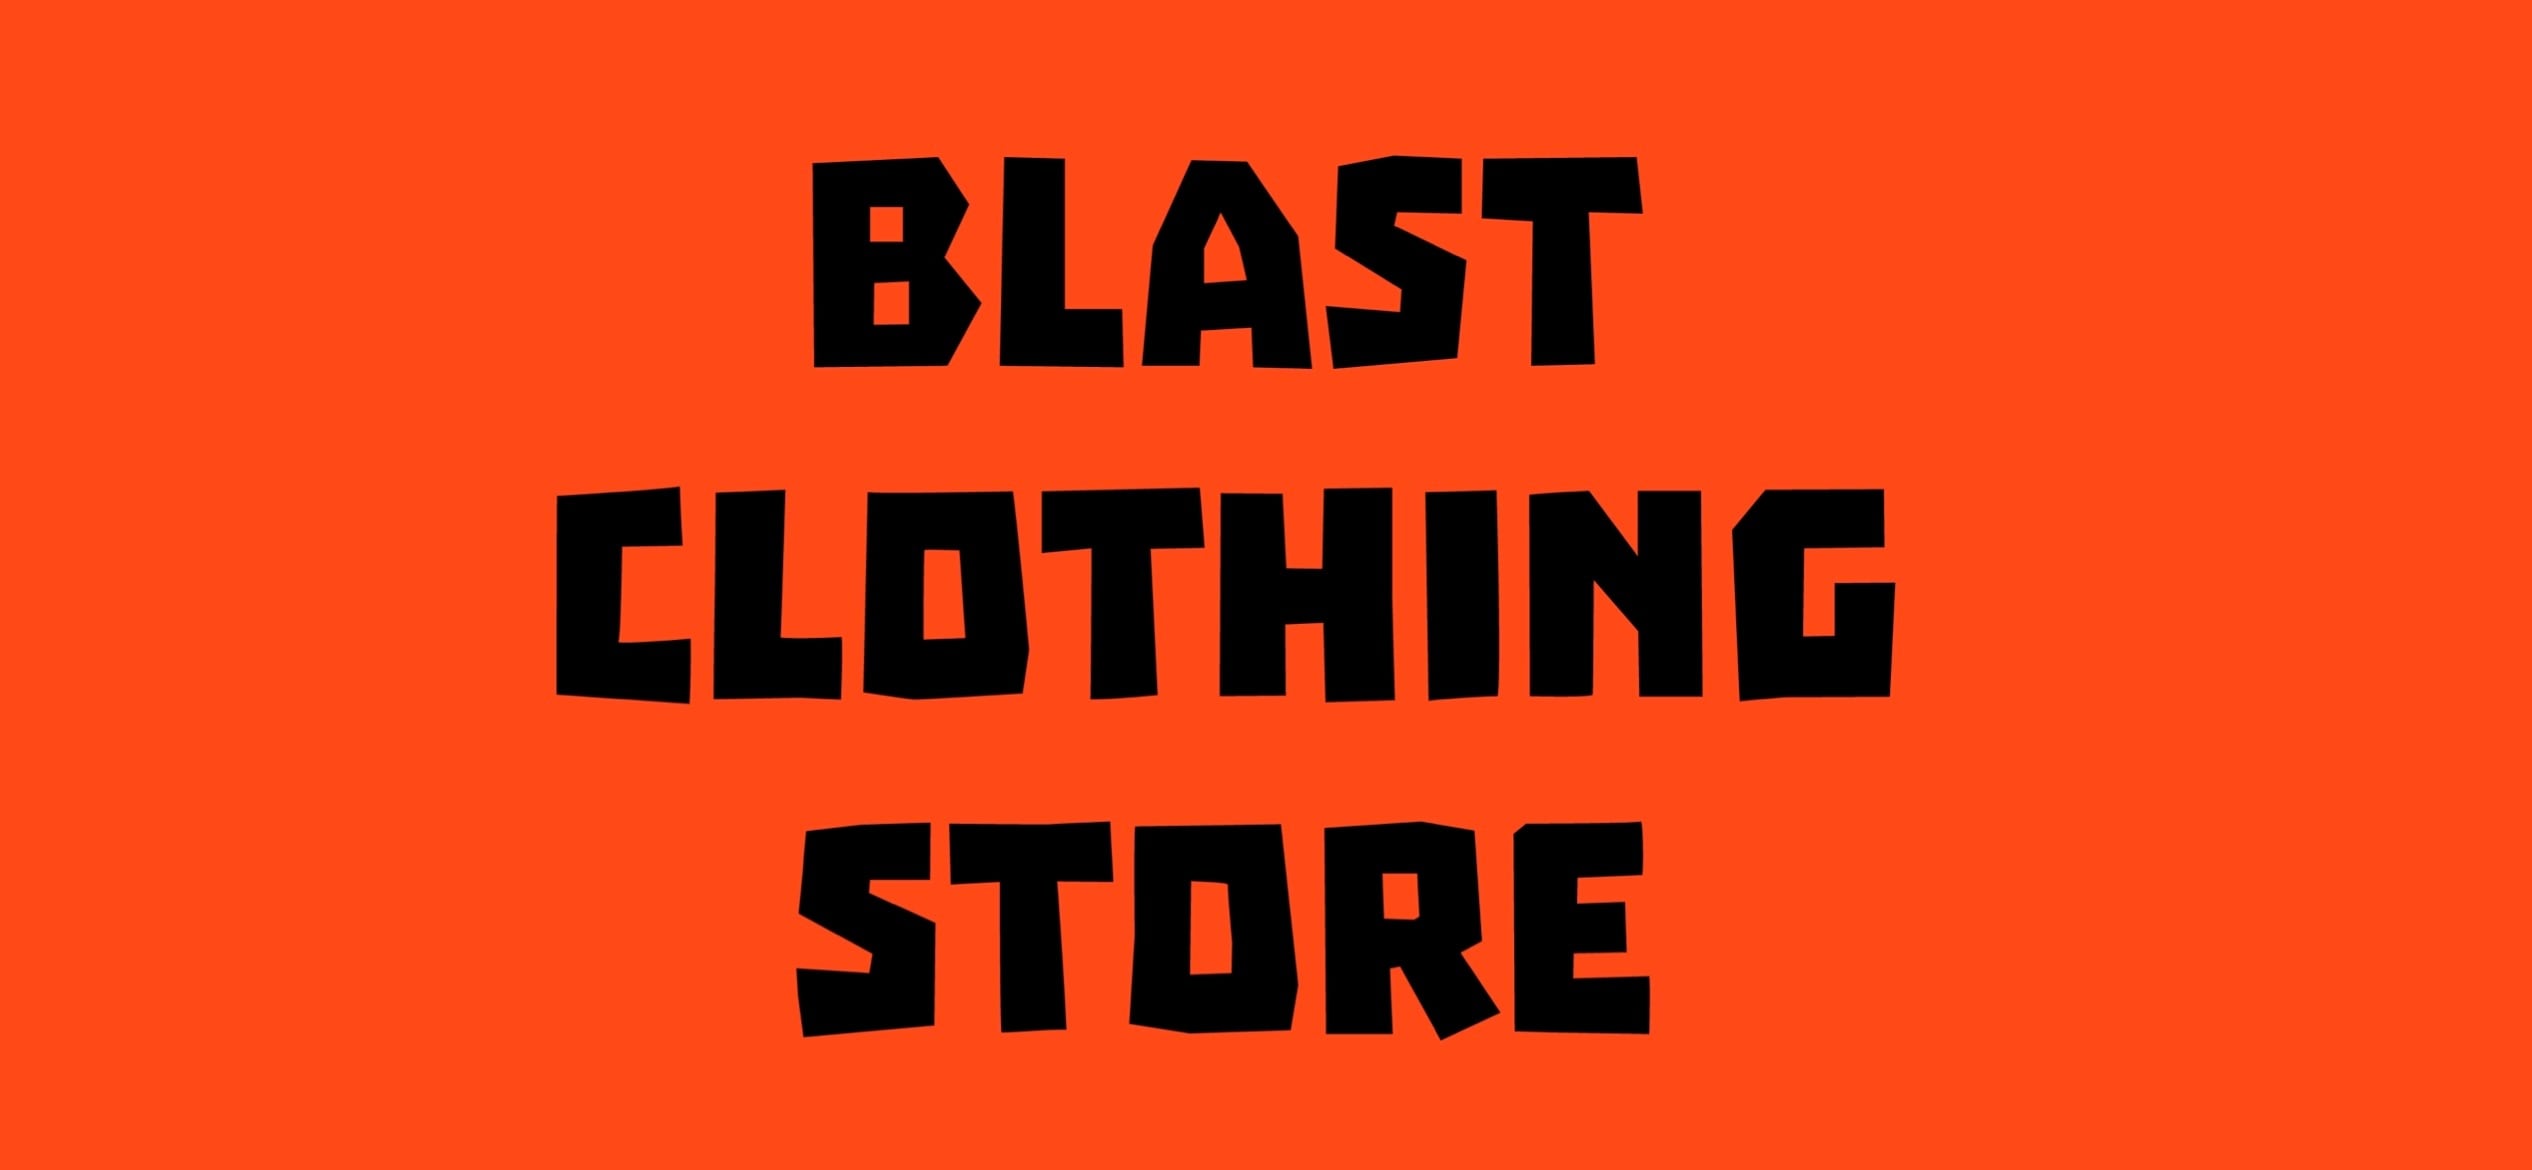 BLAST CLOTHING STORE